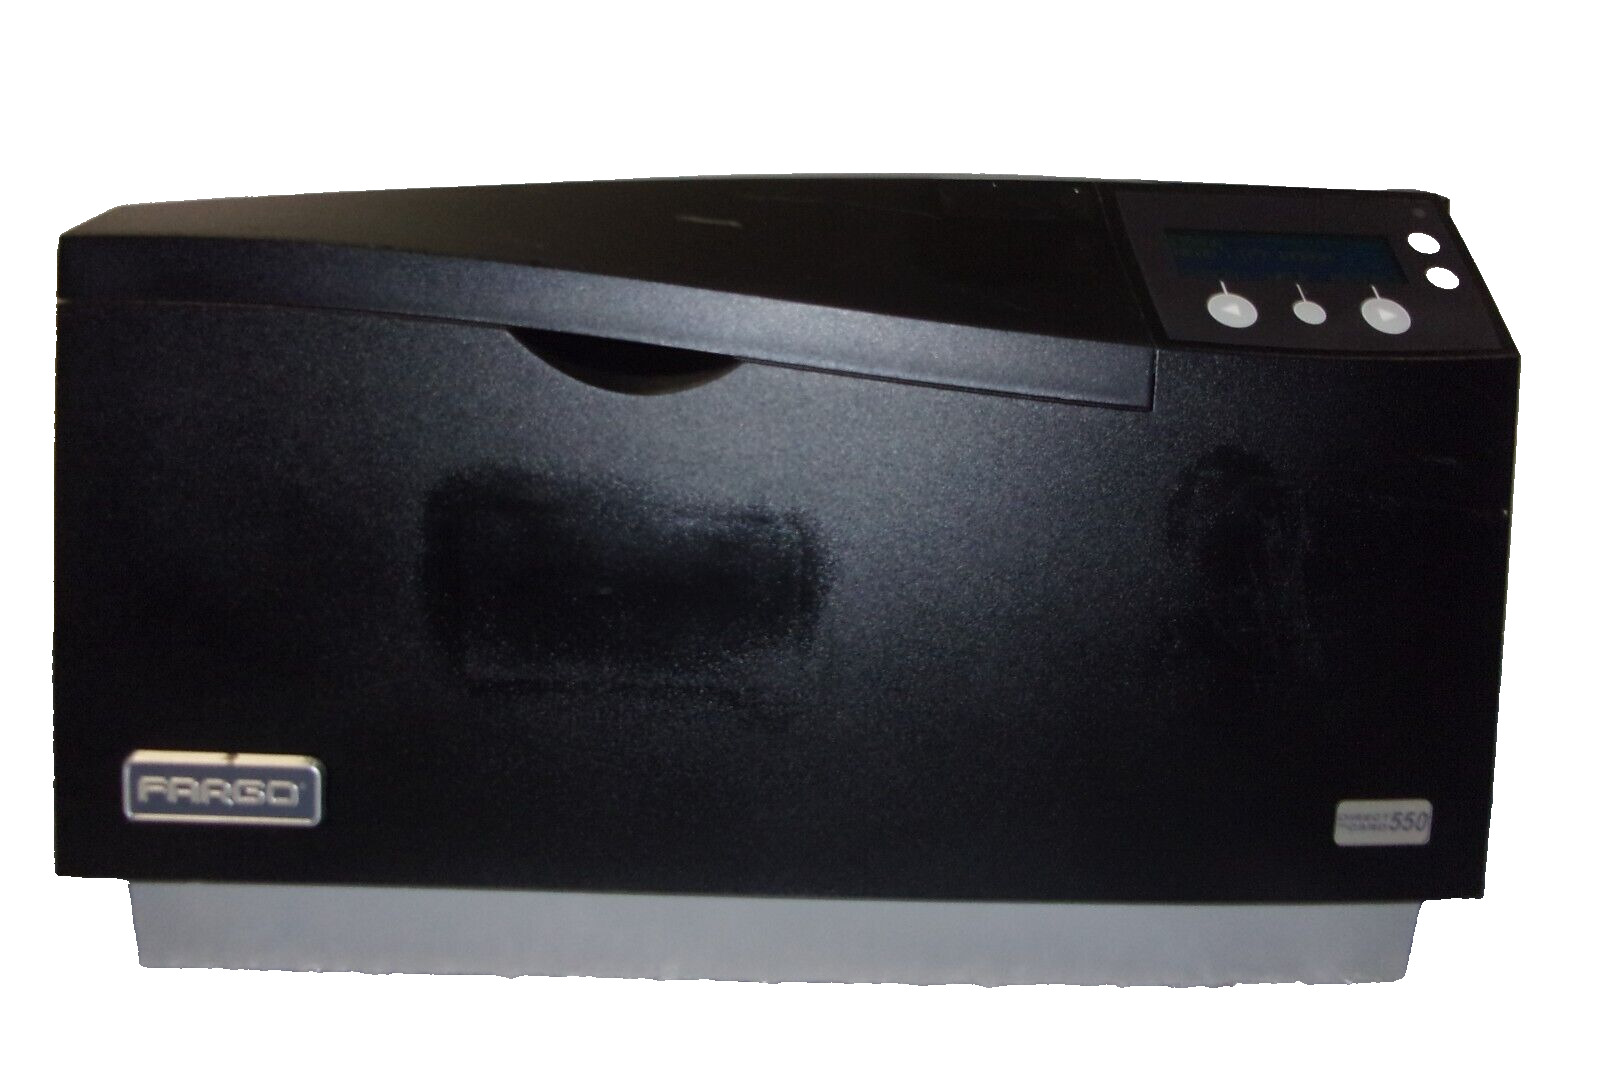 FARGO X001500-091800 Direct to Card 550 Thermal ID Printer